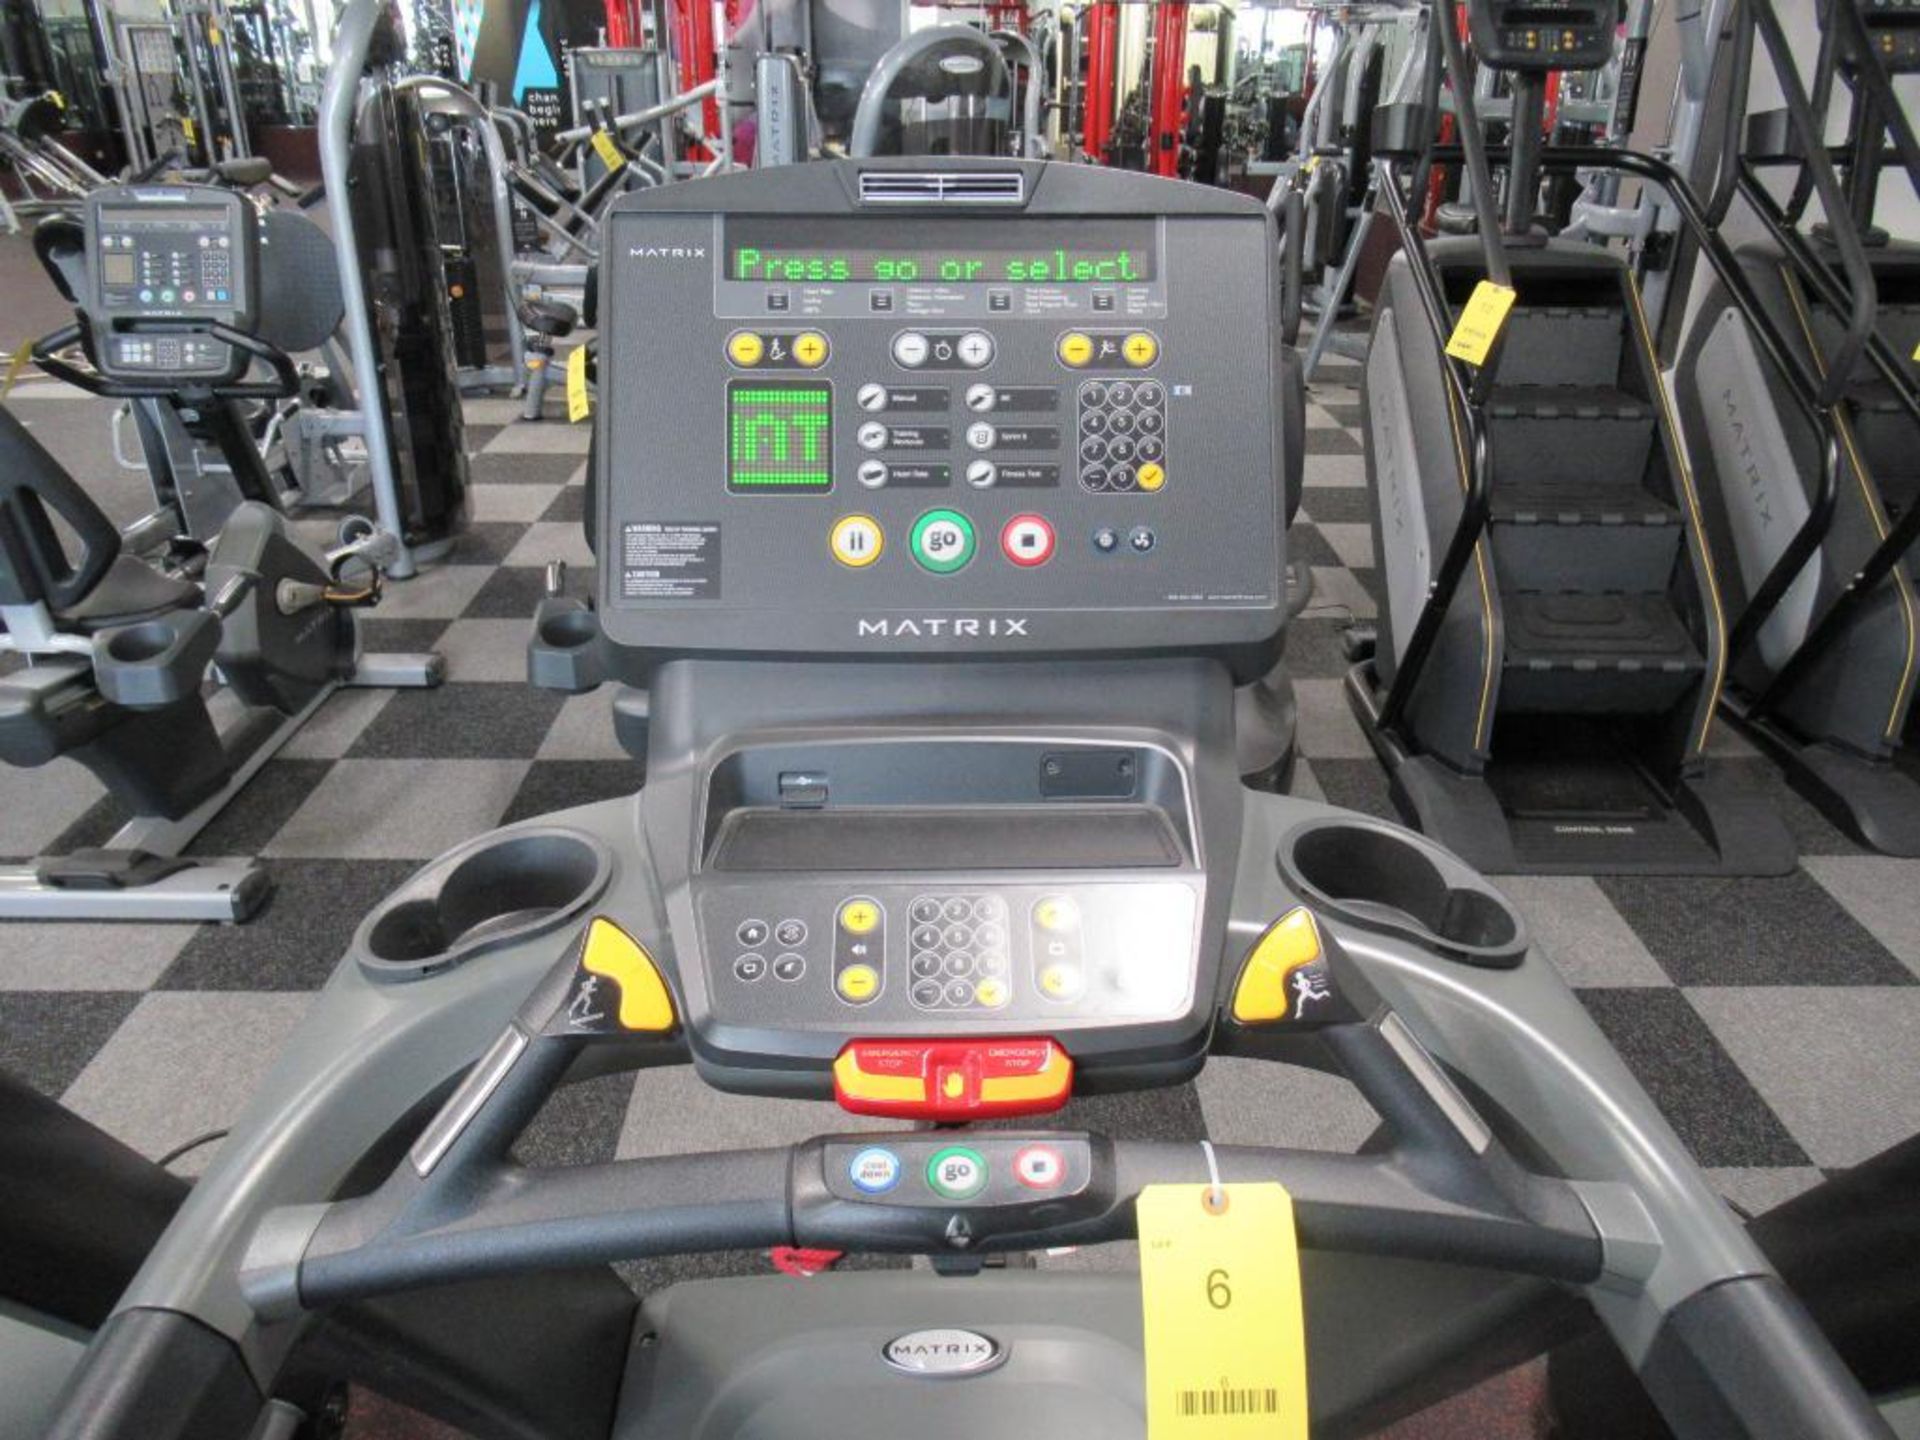 Matrix Ultimate Deck Treadmill, Model T-5XWF-08-C - Image 4 of 5